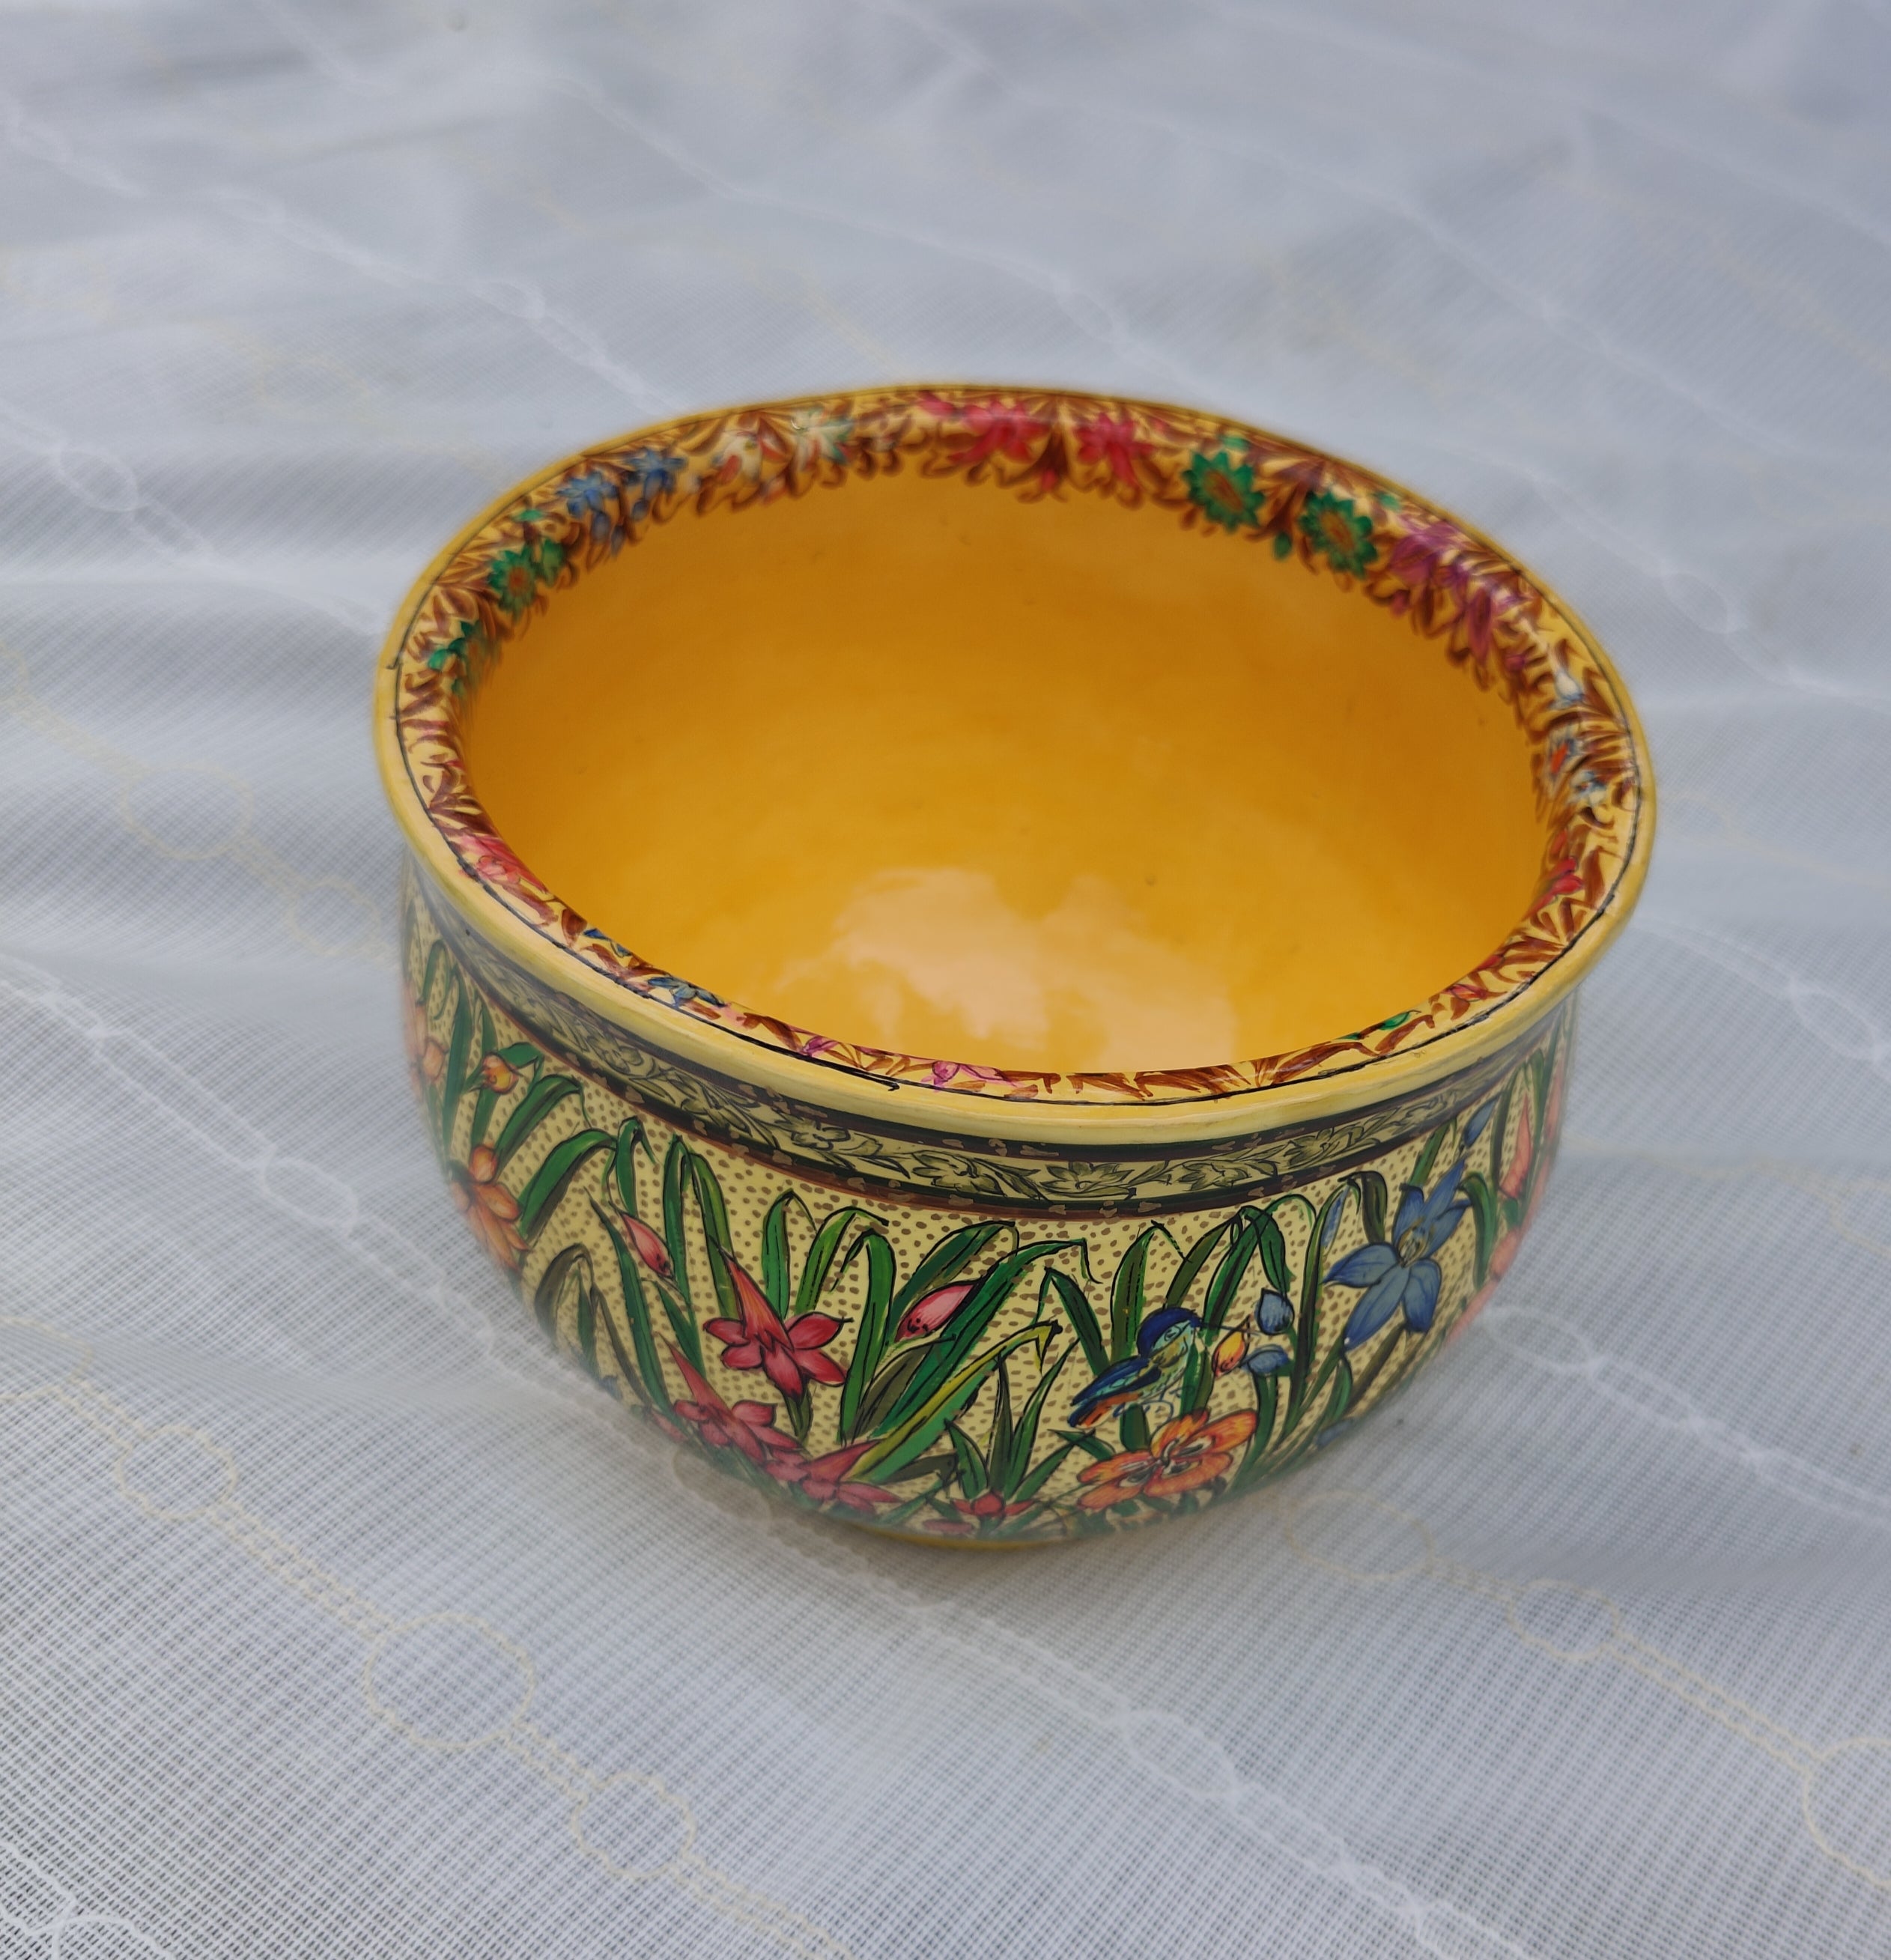 Sonth x Fayaz Ahmad Jan - Yellow Floral Bowl